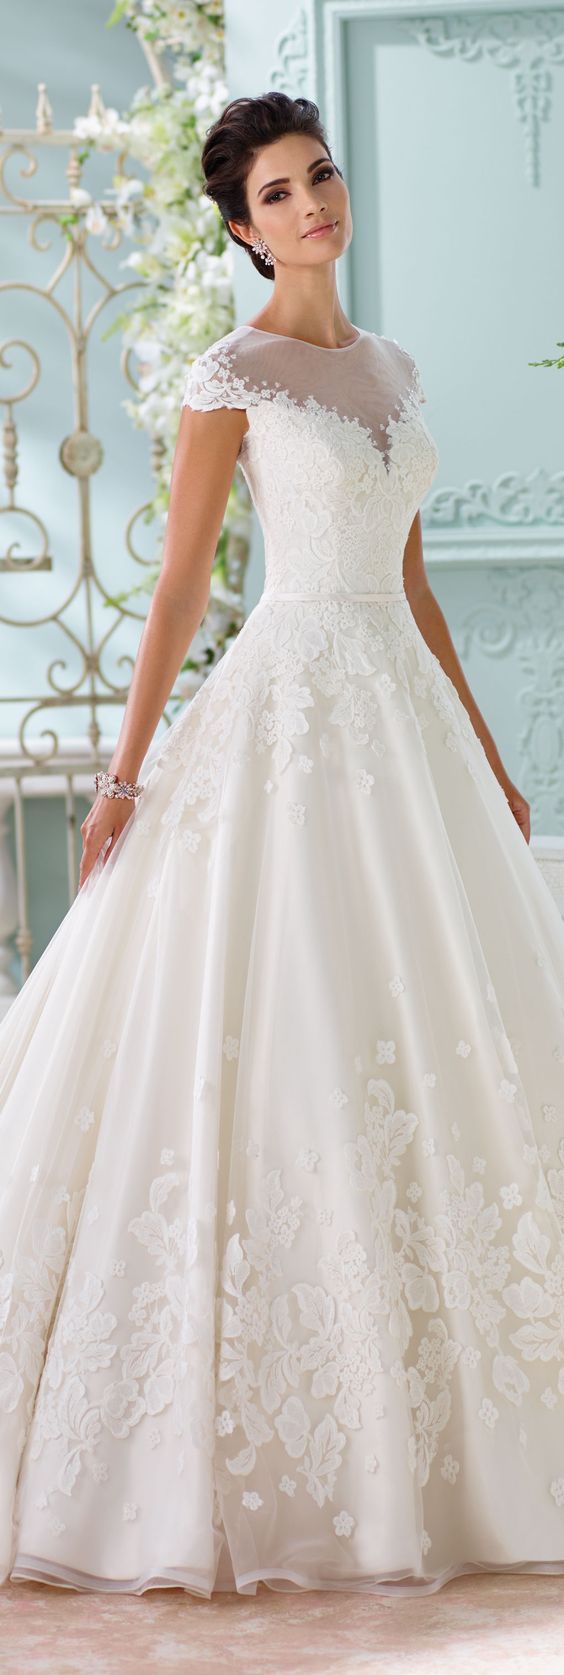 زفاف - Bridal Gown With Cap Sleeves